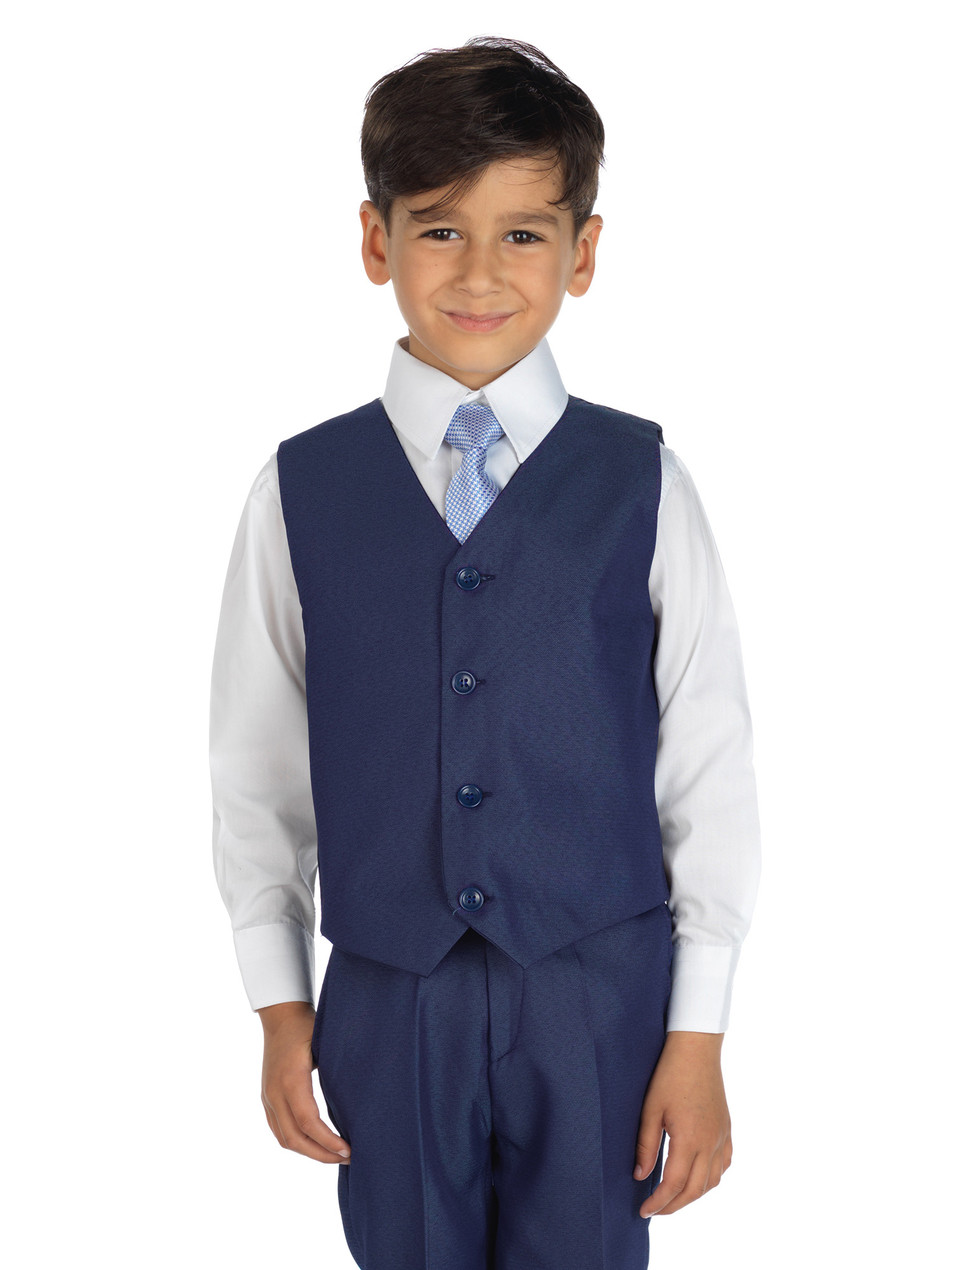 Boys blue waistcoat suit | Boys indigo page boy outfits